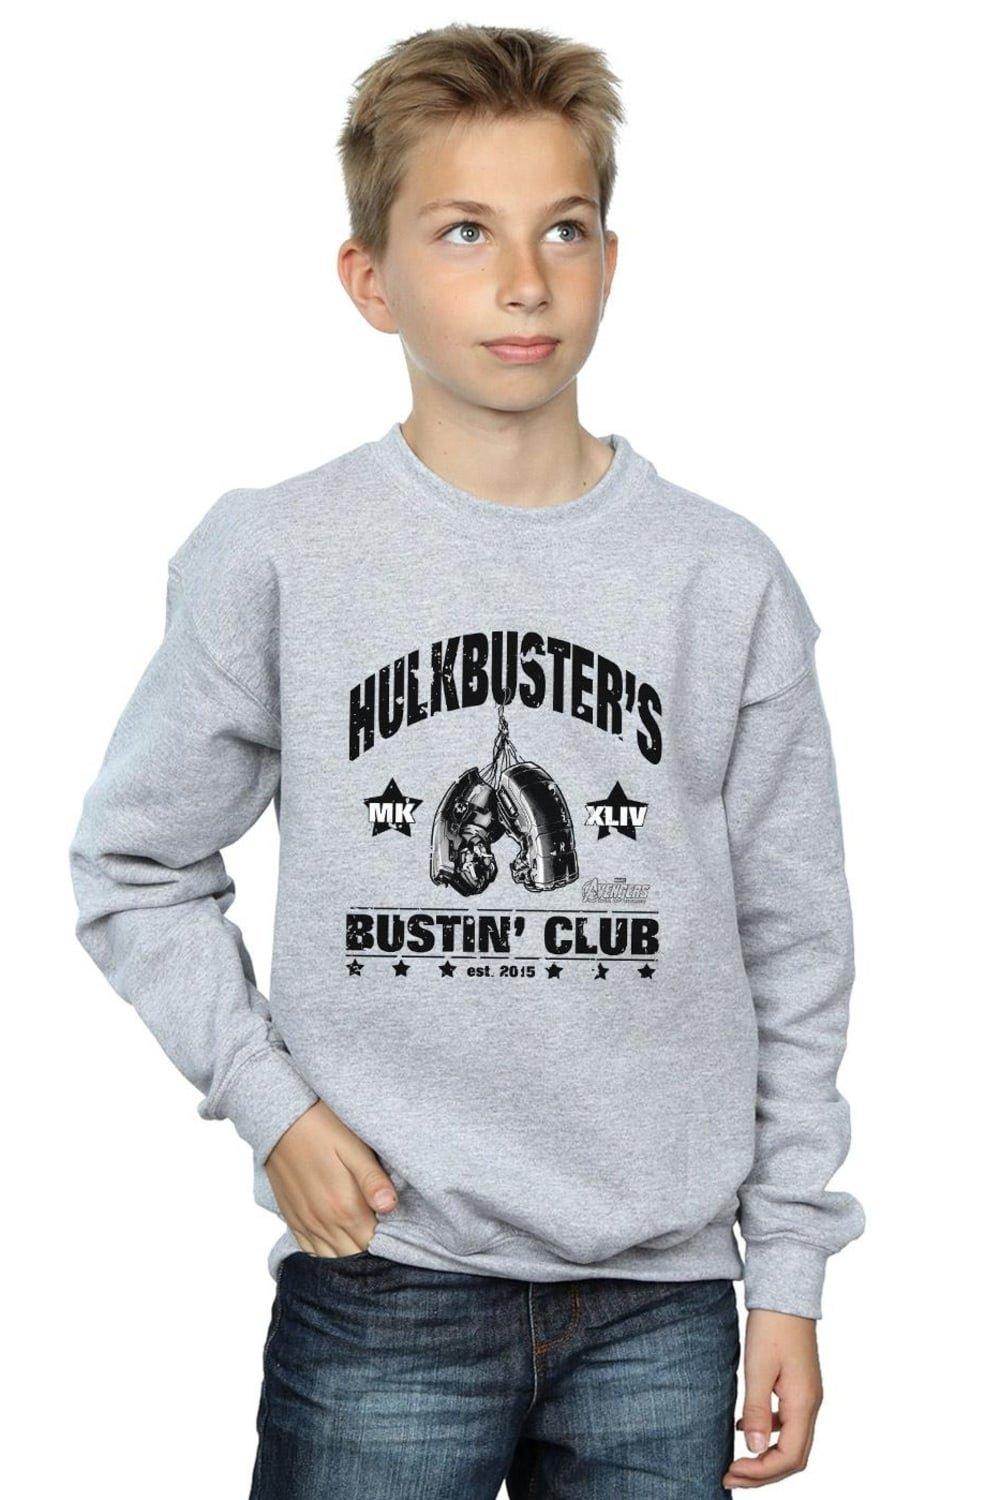 Iron Man Hulkbuster’s Bustin’ Club Sweatshirt